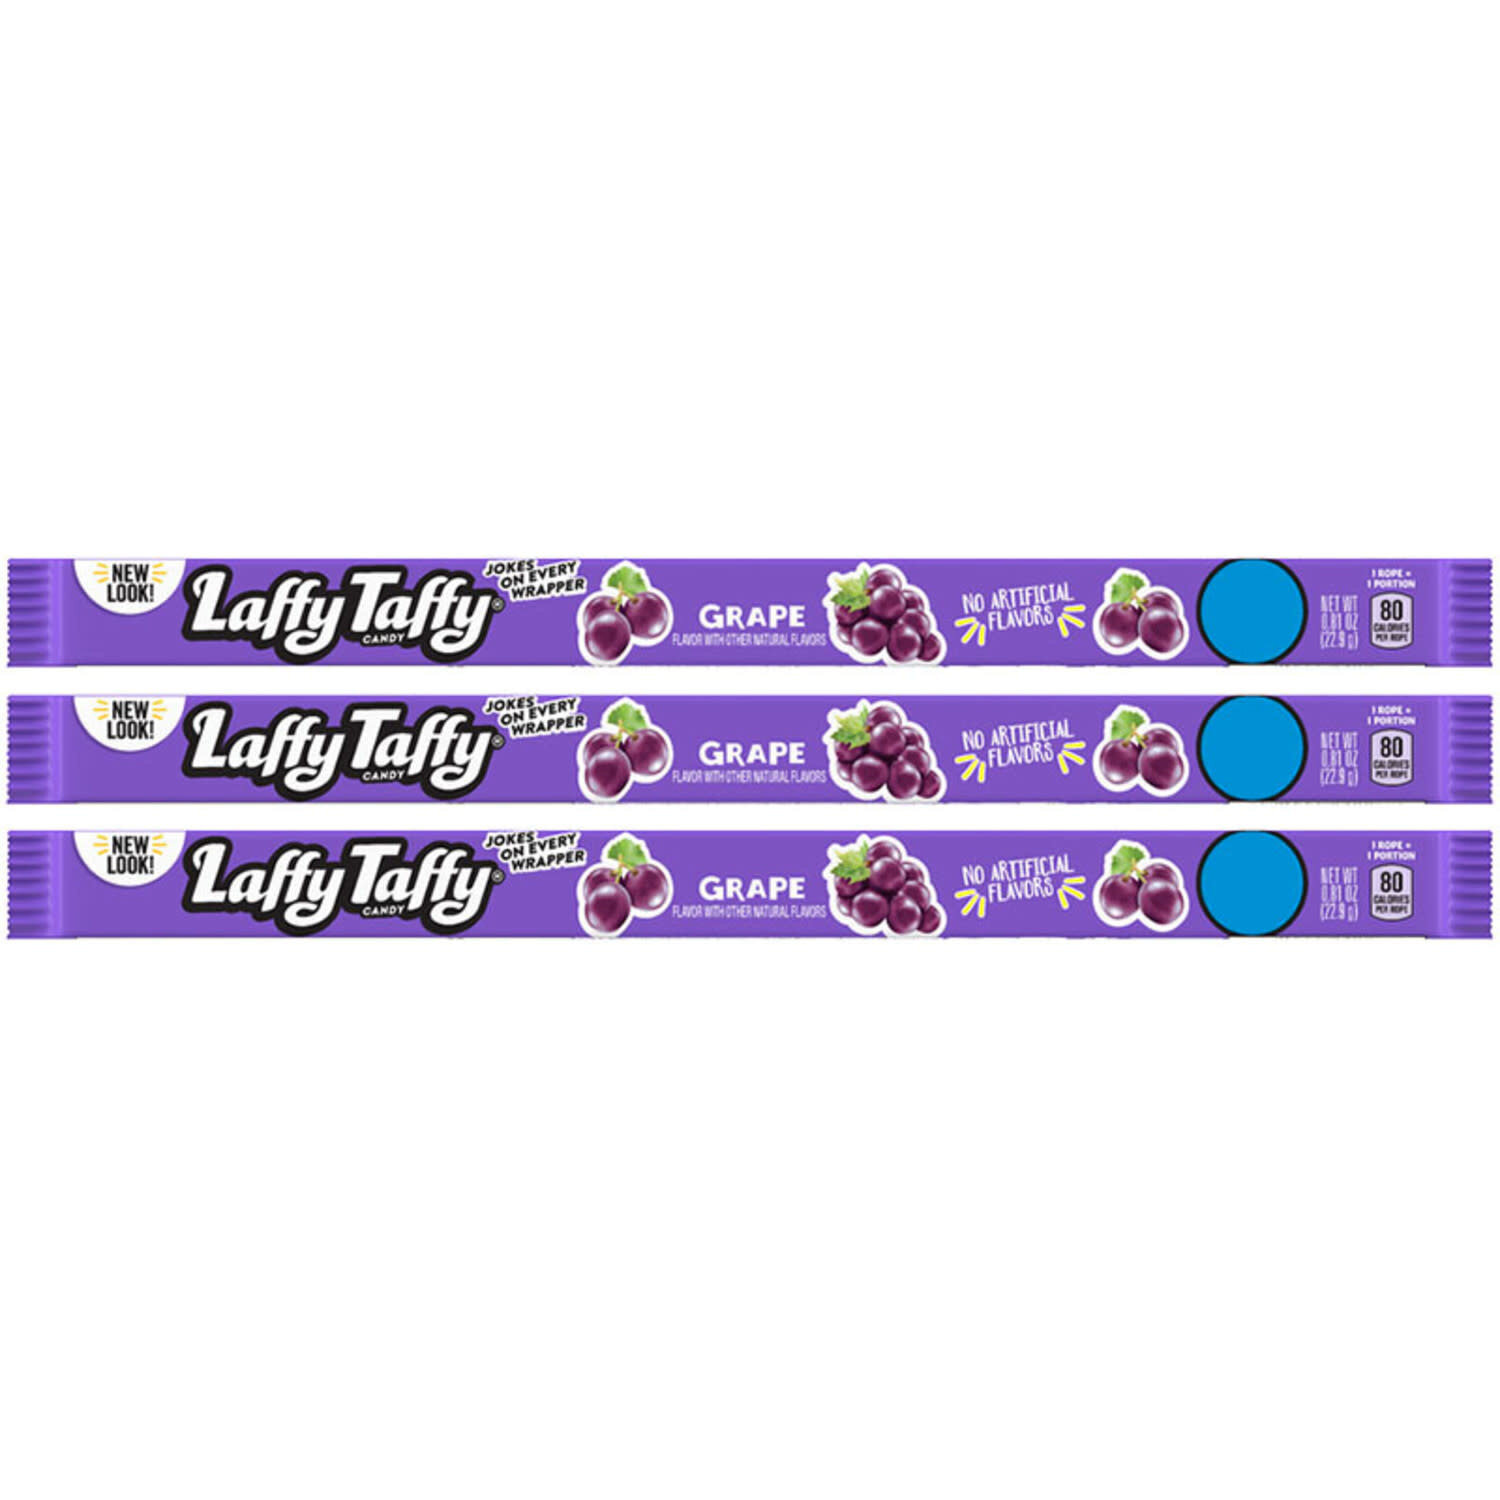 Laffy Taffy Grape (22g x 3)